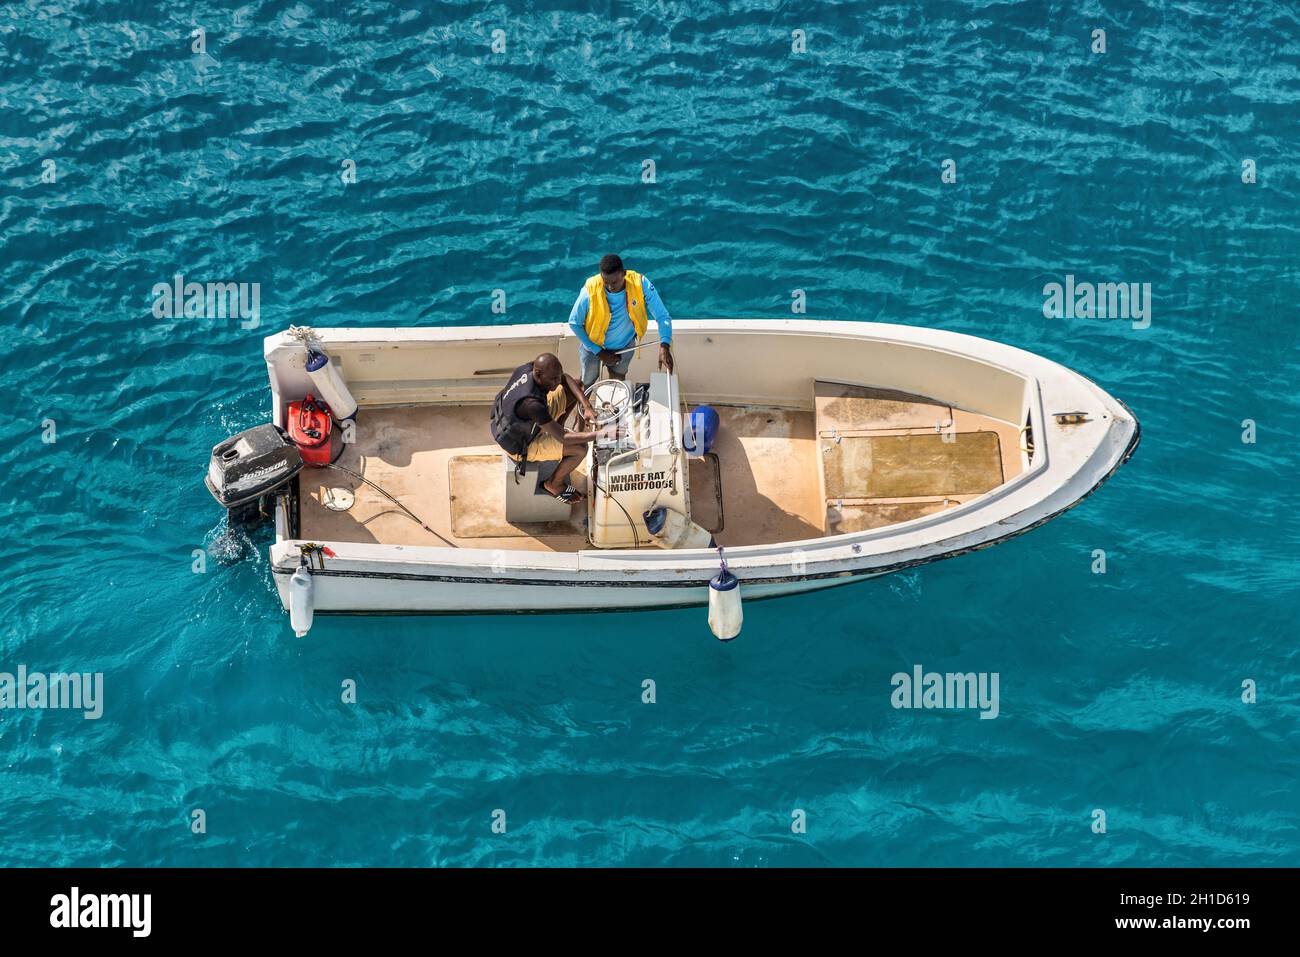 Ocho Rios, Jamaica - April 22, 2019: Top-down view of a motor boat in the ocean near the tropical Caribbean island of Ocho Rios, Jamaica. Stock Photo